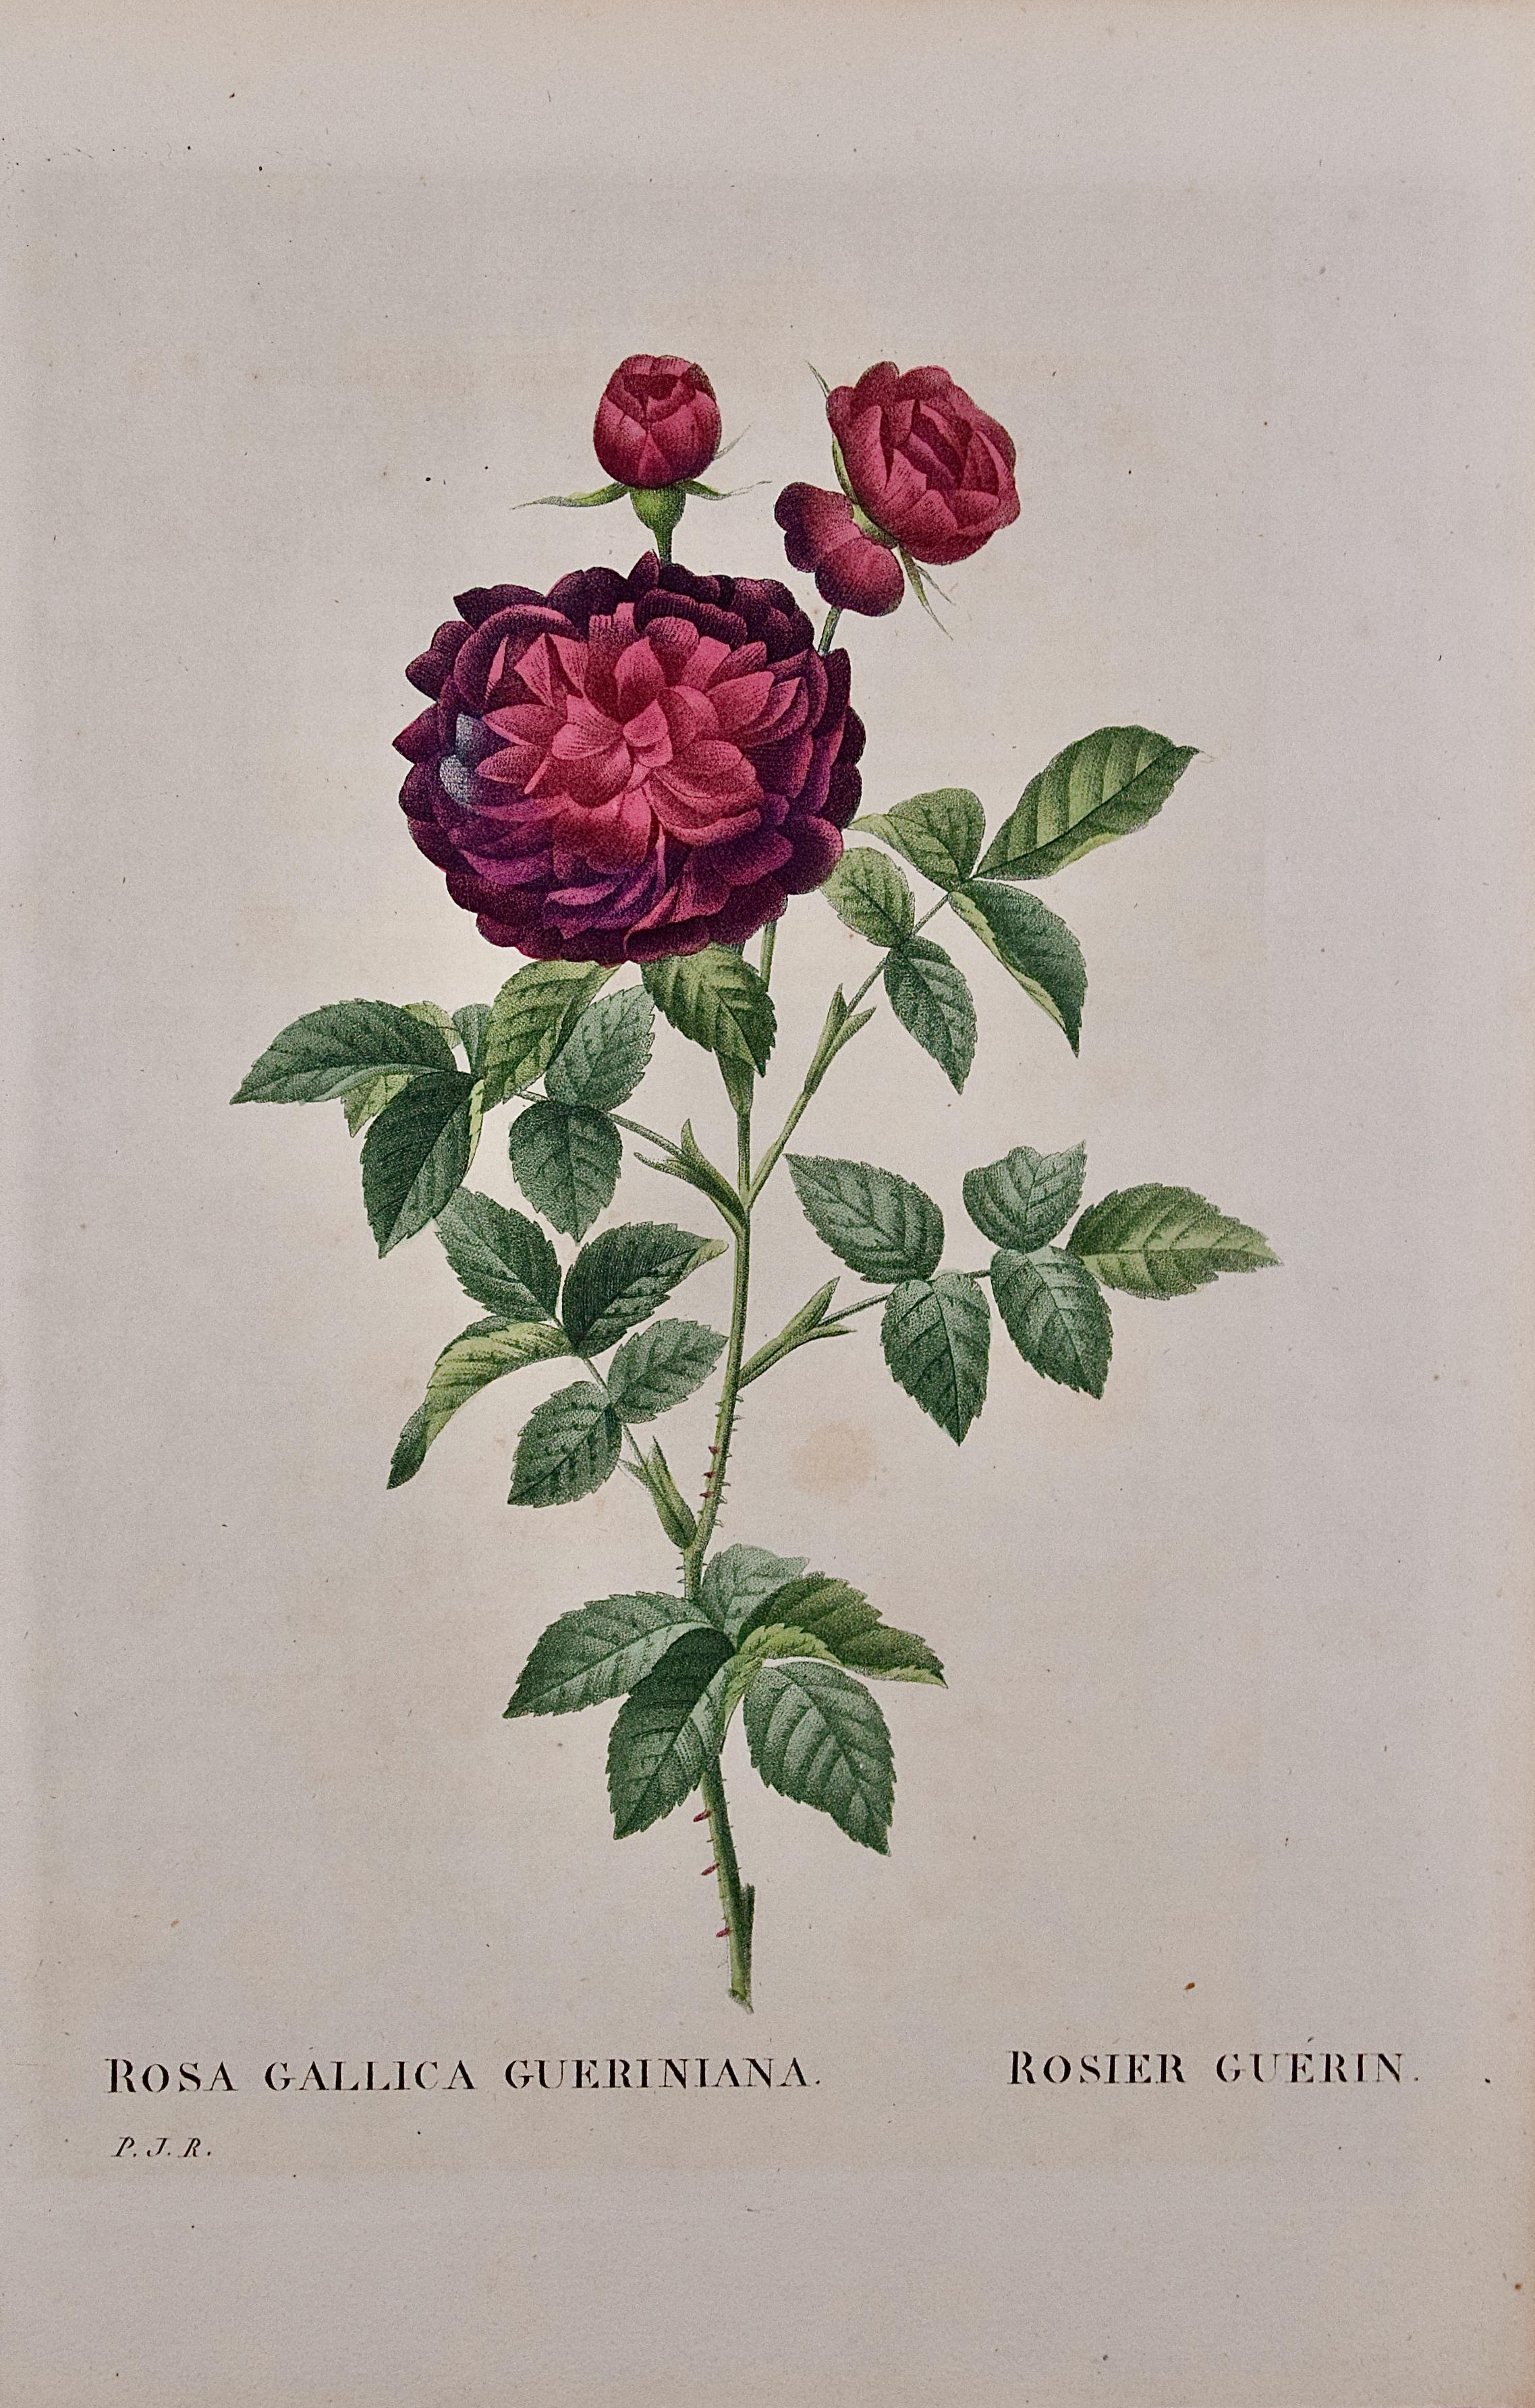 Pierre-Joseph Redouté Still-Life Print - Rosa Gallica Gueriniana (Roses): Original 19th C. Hand-colored Redoute Engraving